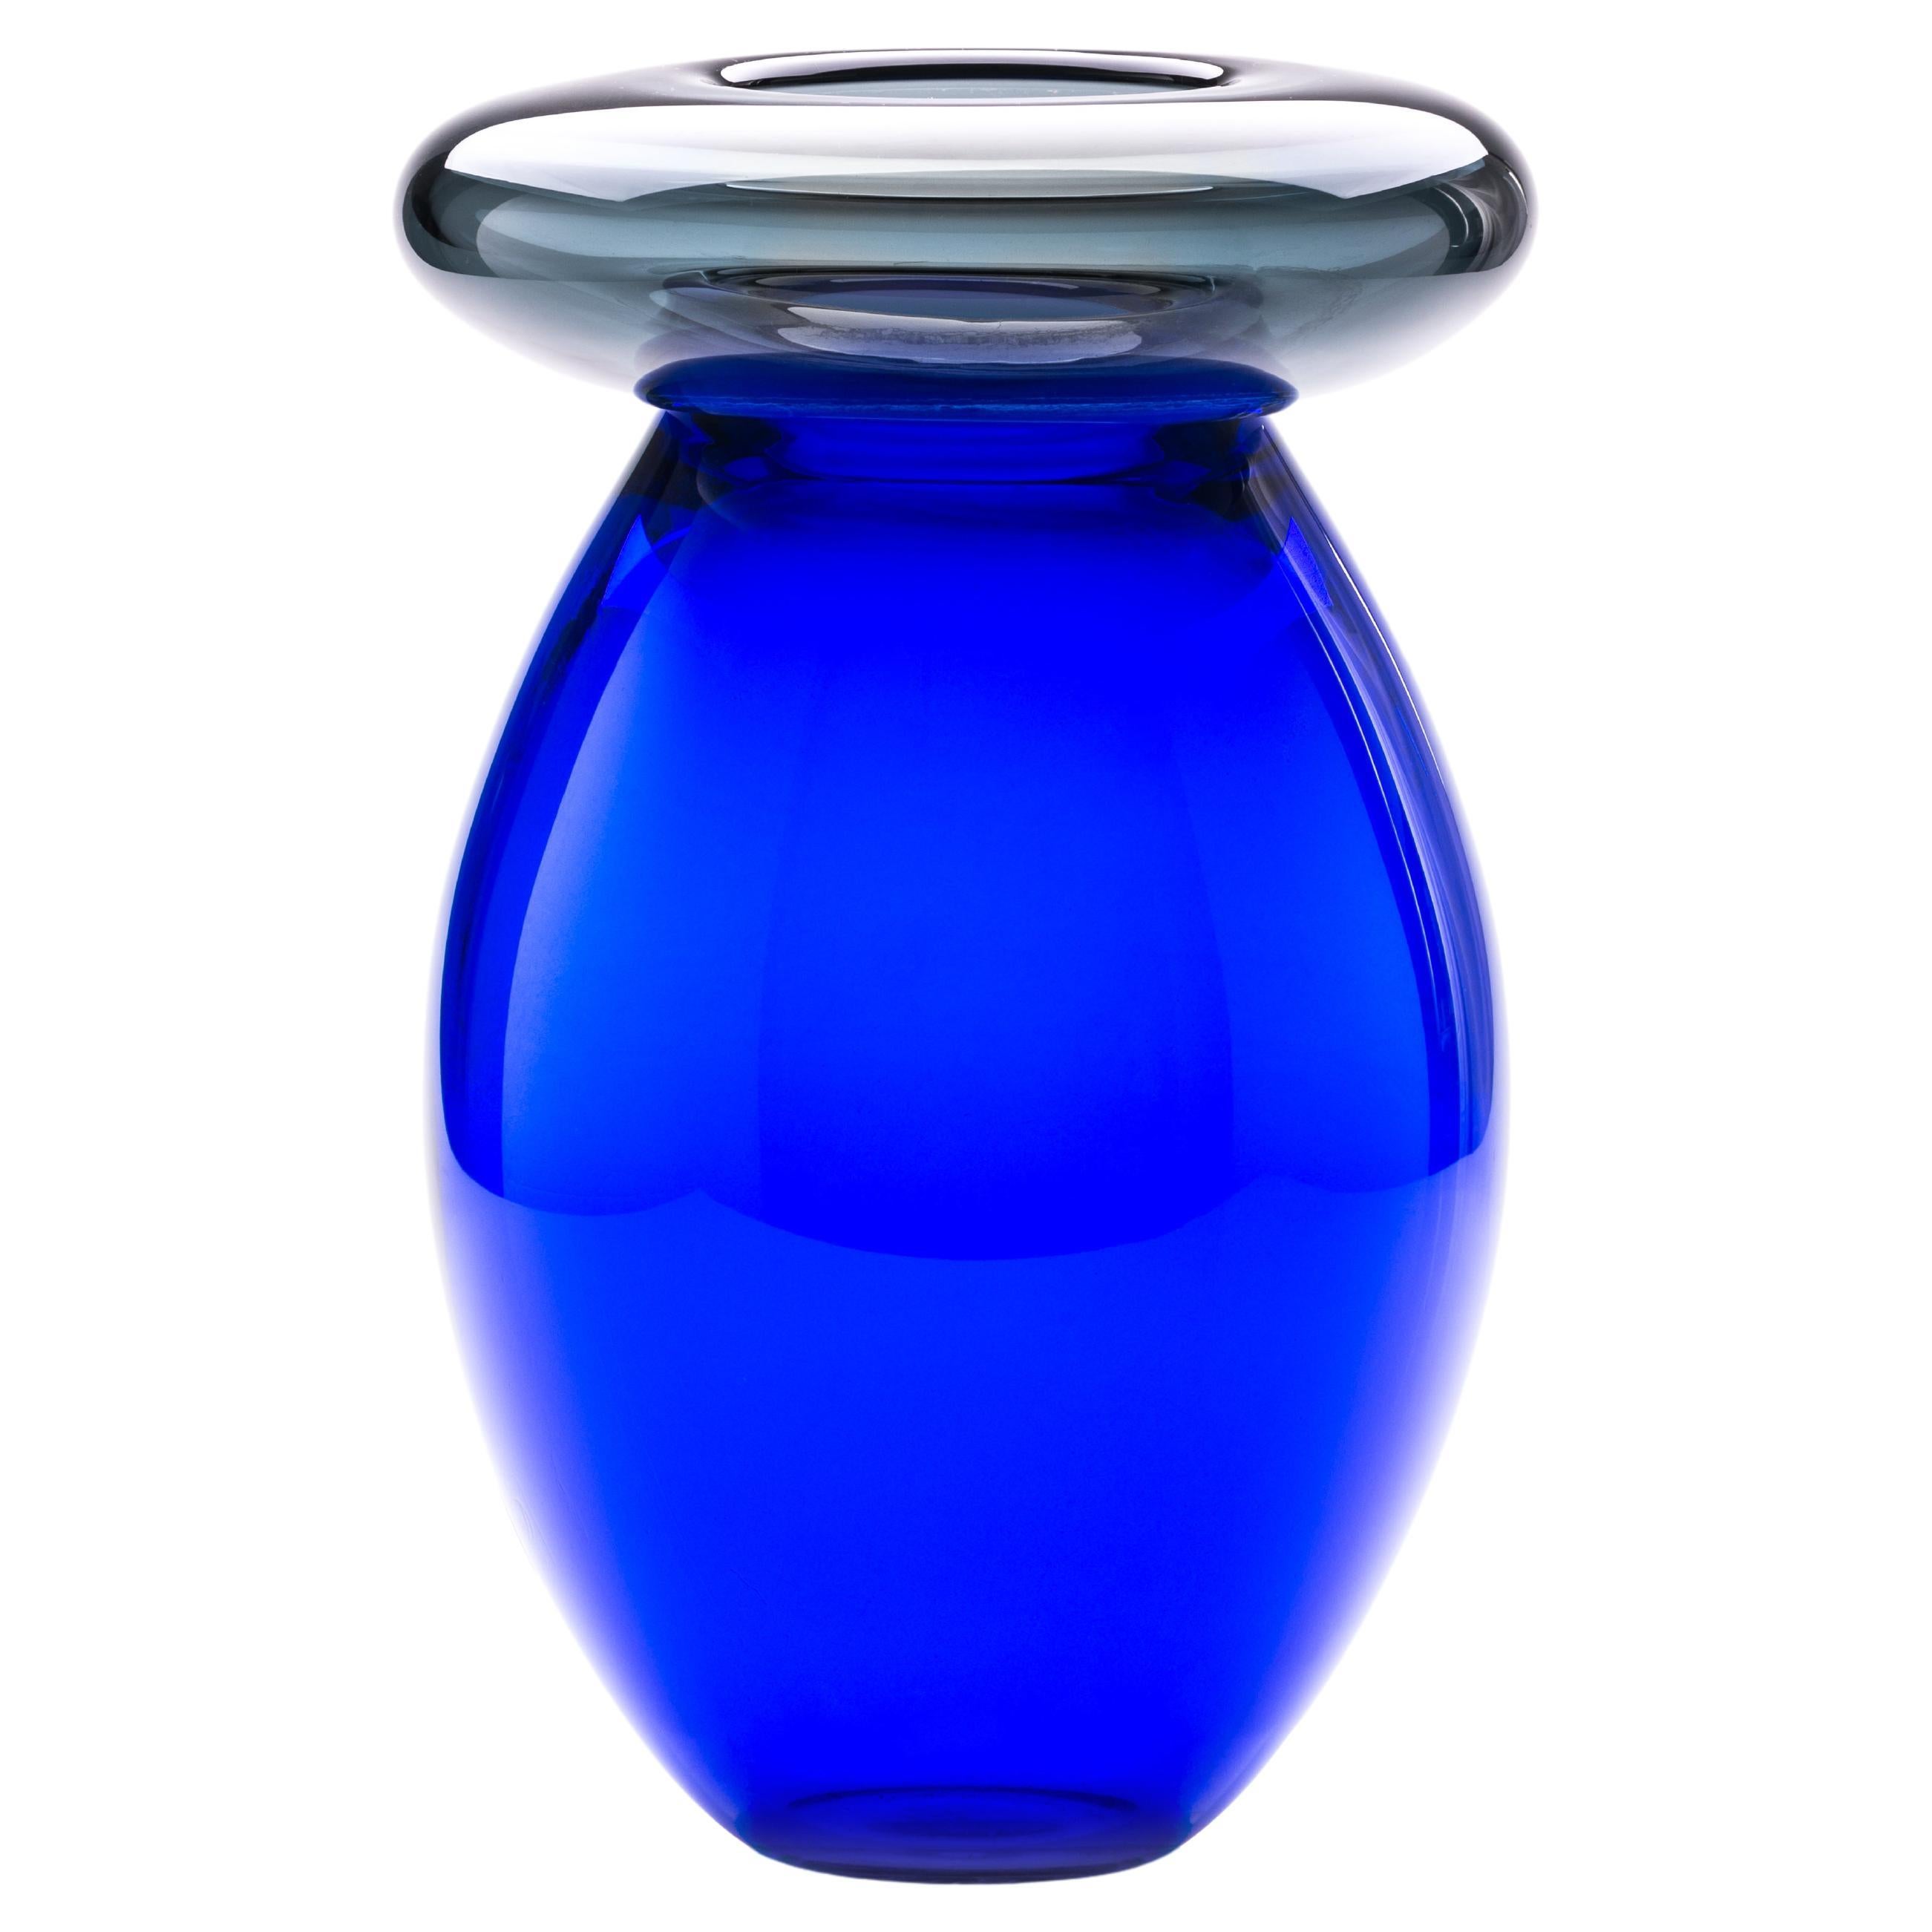 Queen Blue Vase by Purho